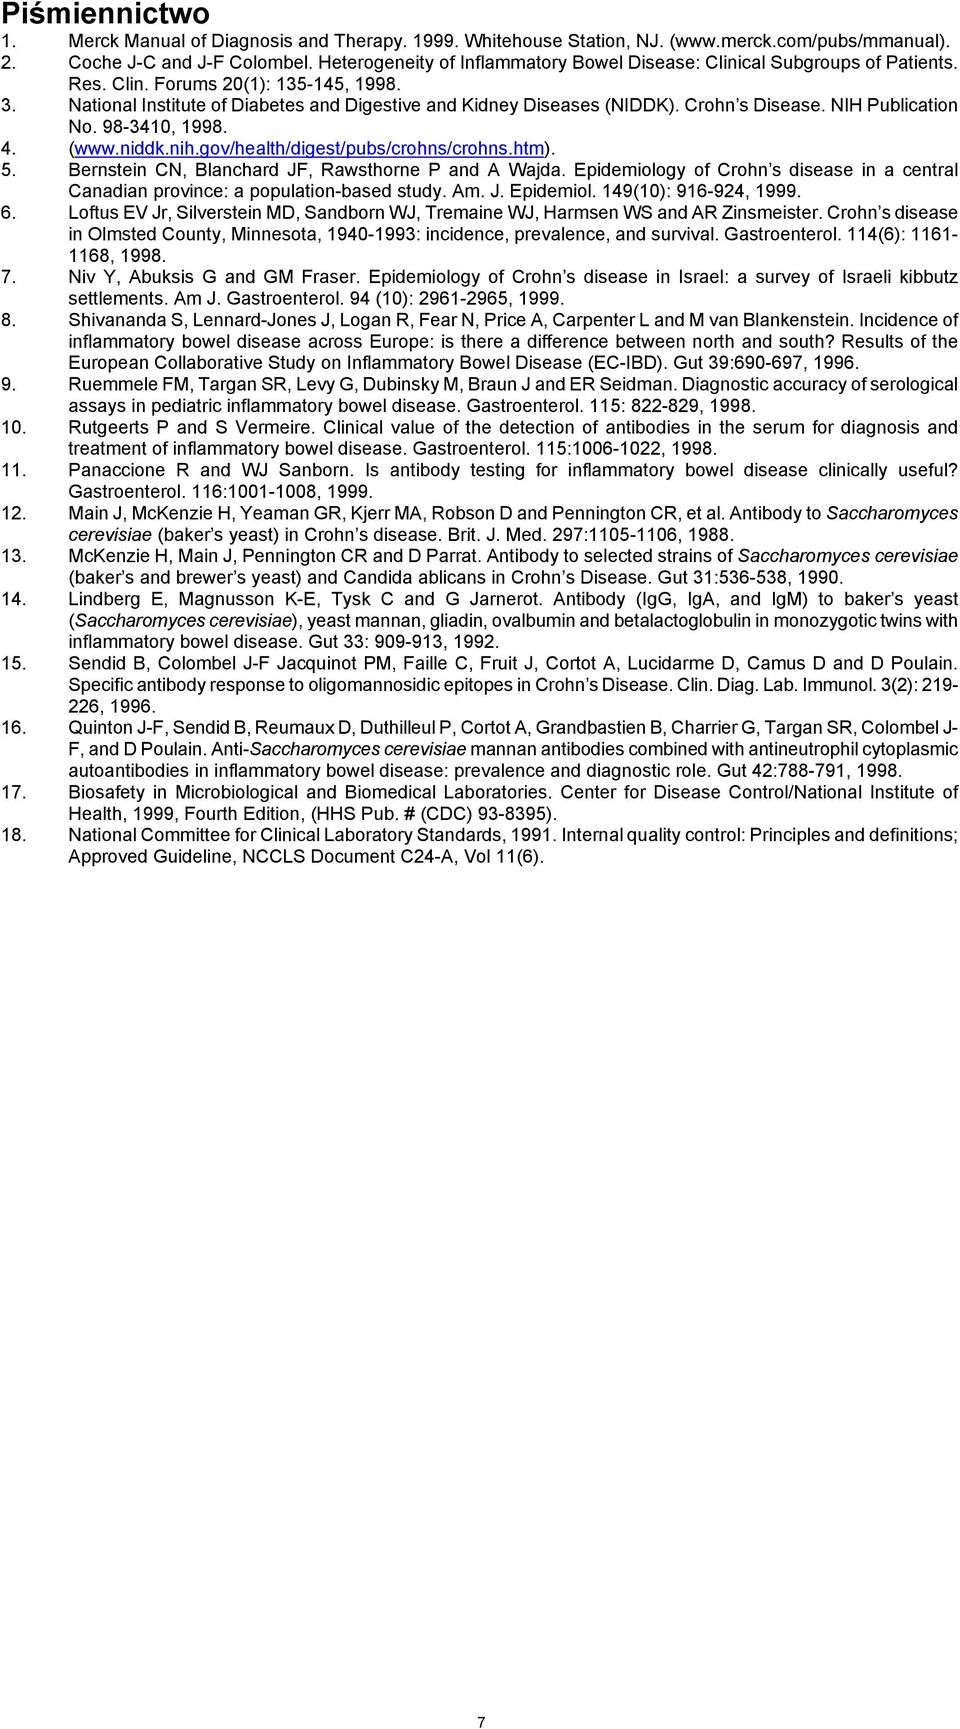 Crohn s Disease. NIH Publication No. 98-3410, 1998. 4. (www.niddk.nih.gov/health/digest/pubs/crohns/crohns.htm). 5. Bernstein CN, Blanchard JF, Rawsthorne P and A Wajda.